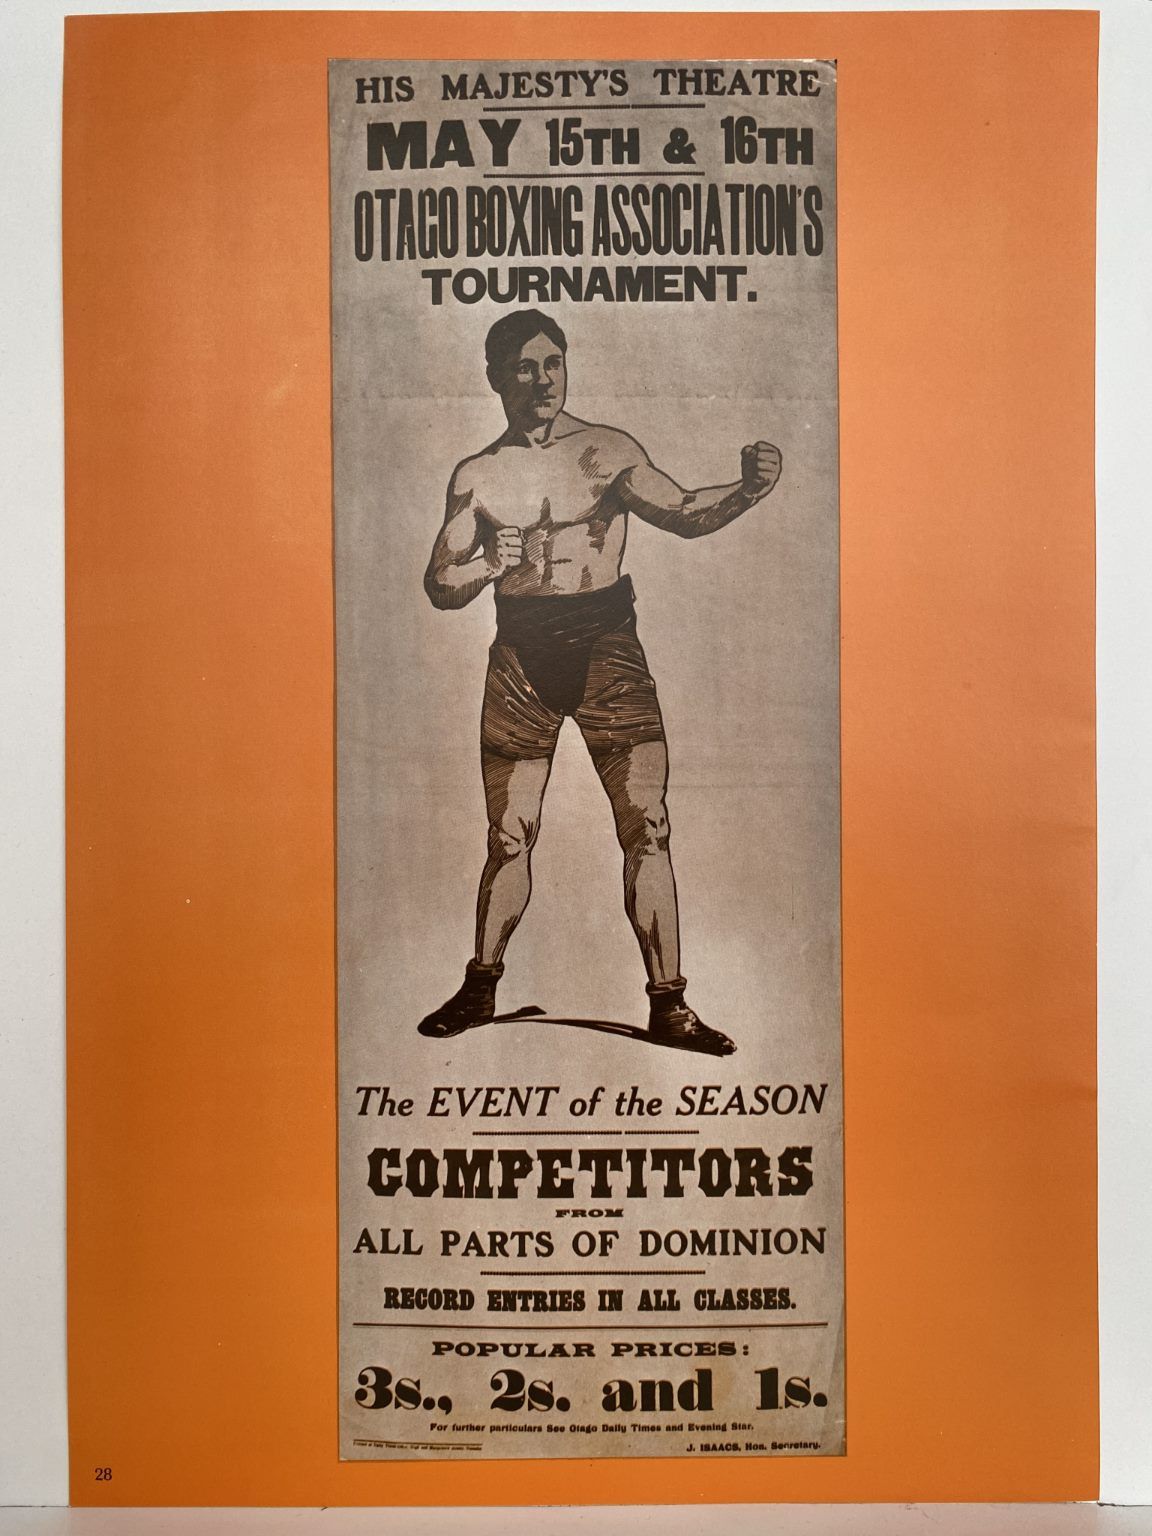 VINTAGE POSTER: Otago Boxing Association 1907